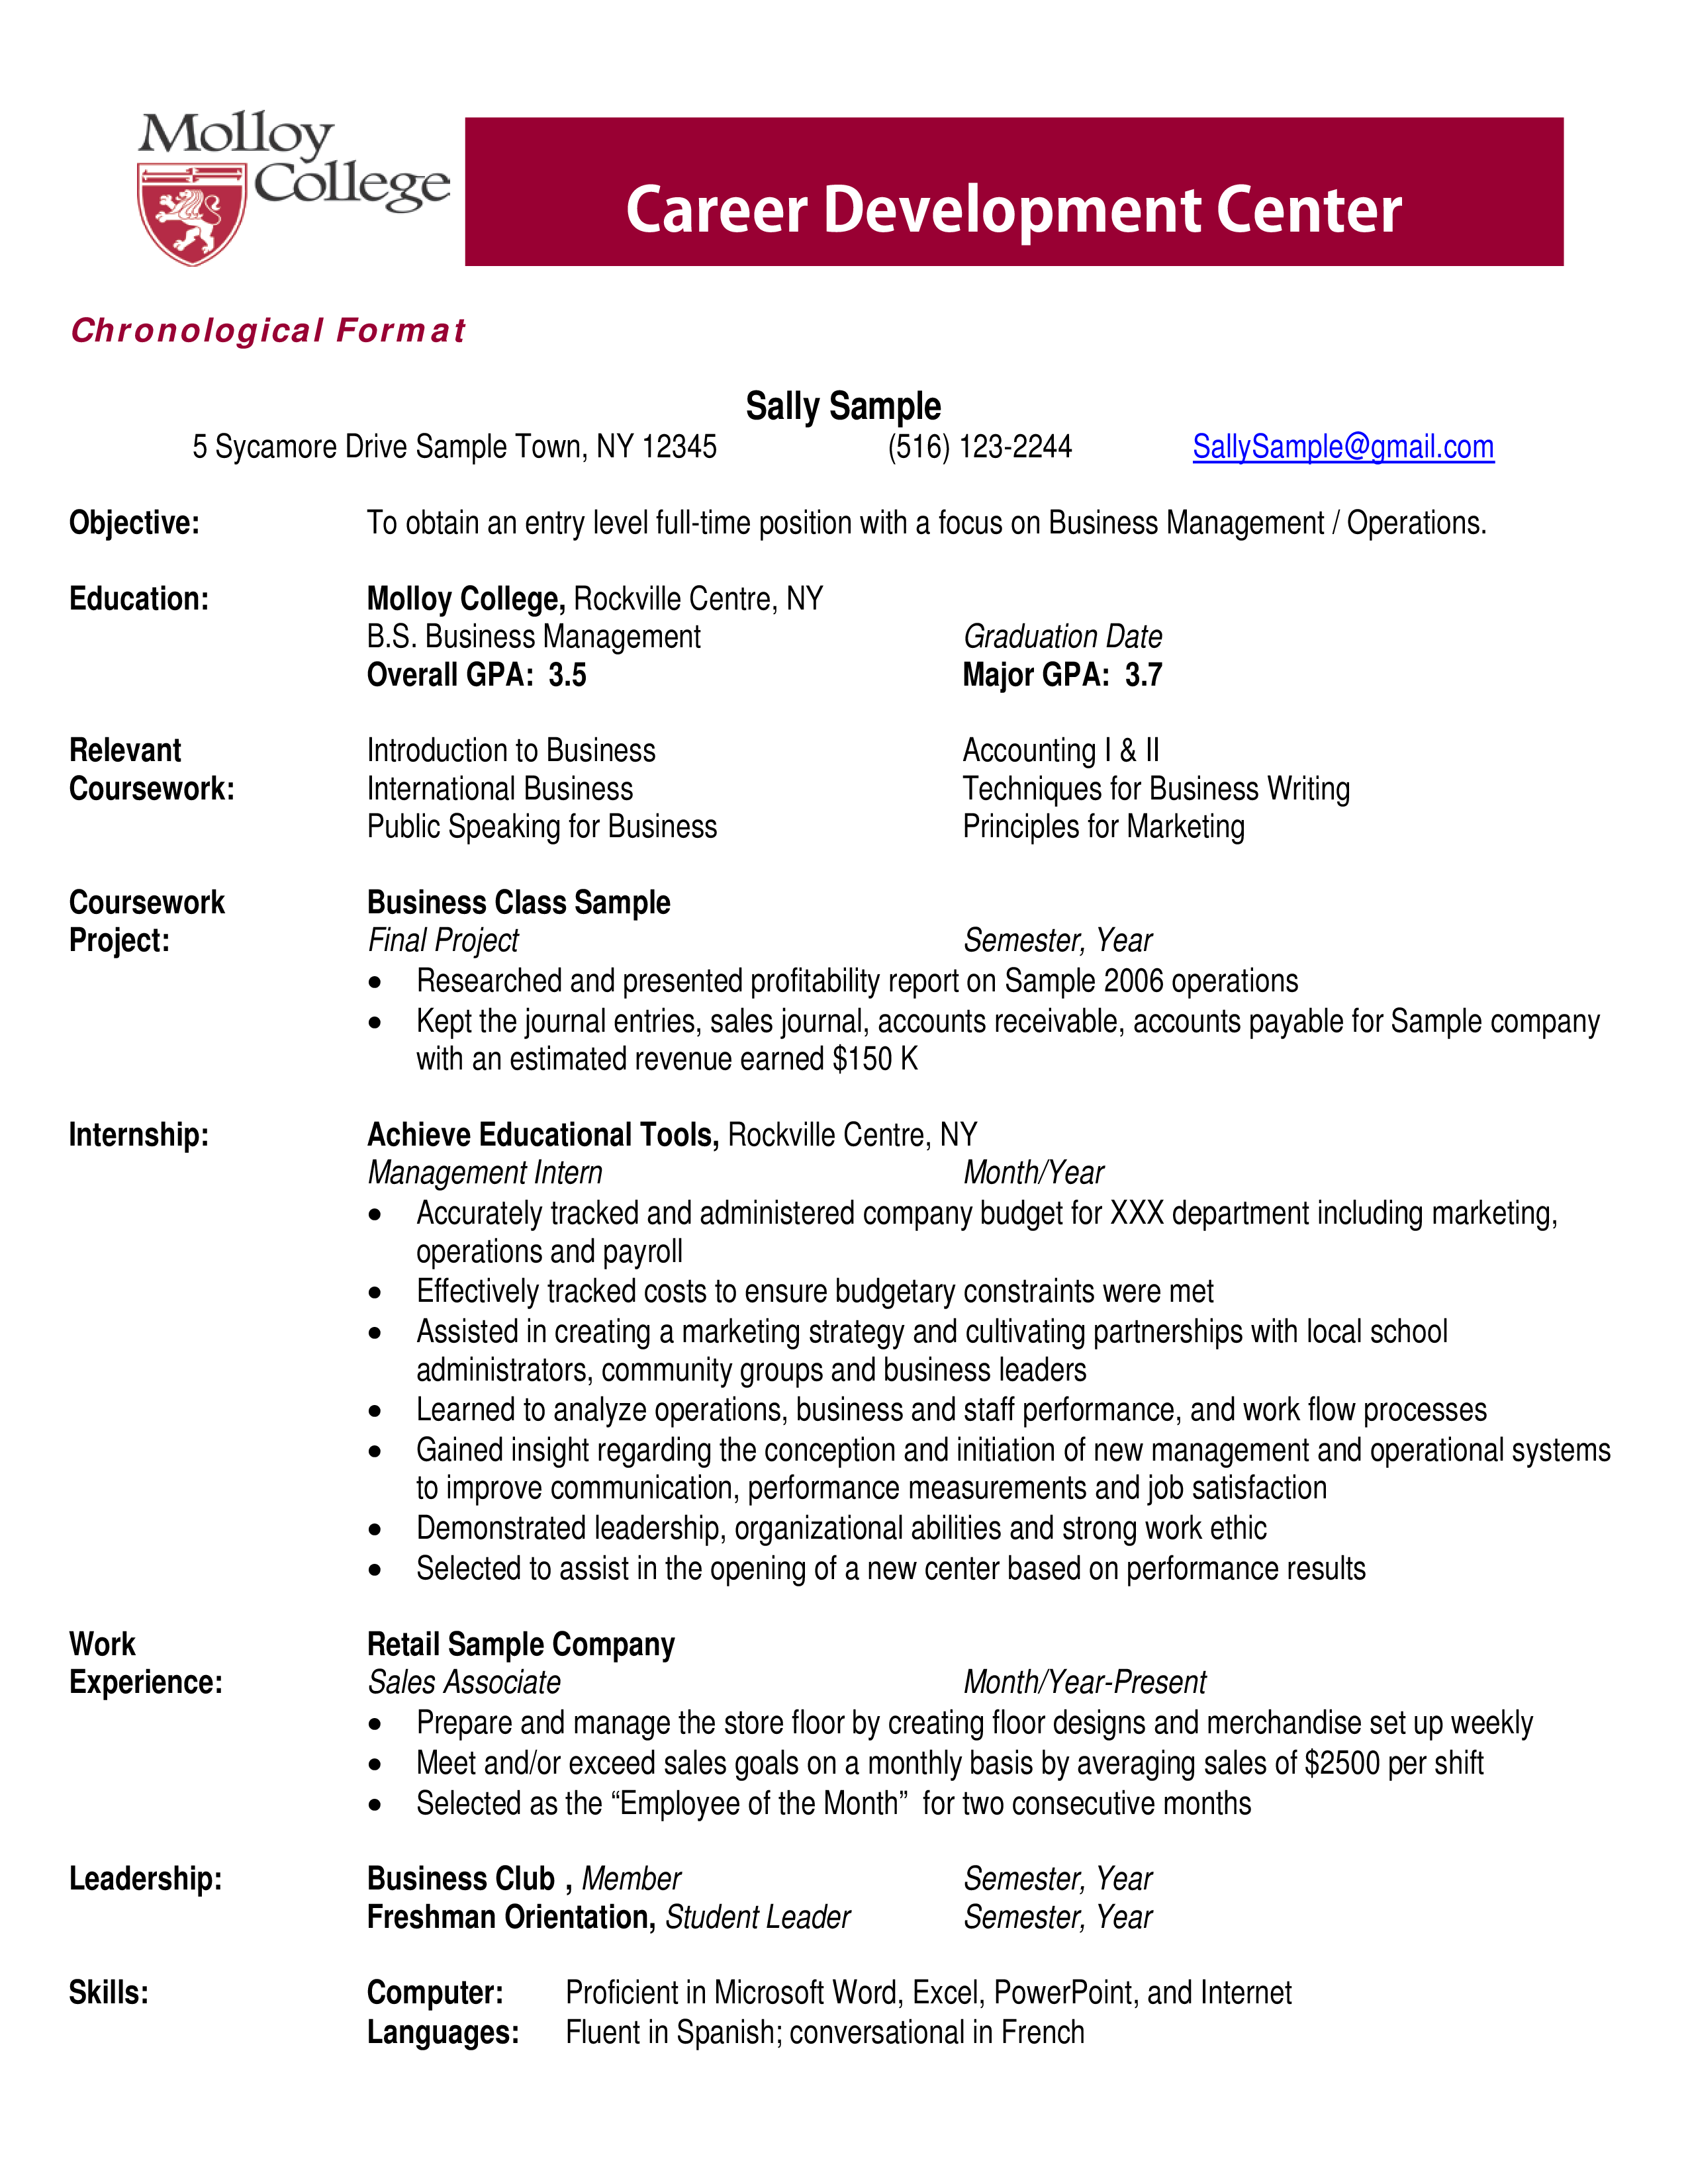 social work resume skills genogram